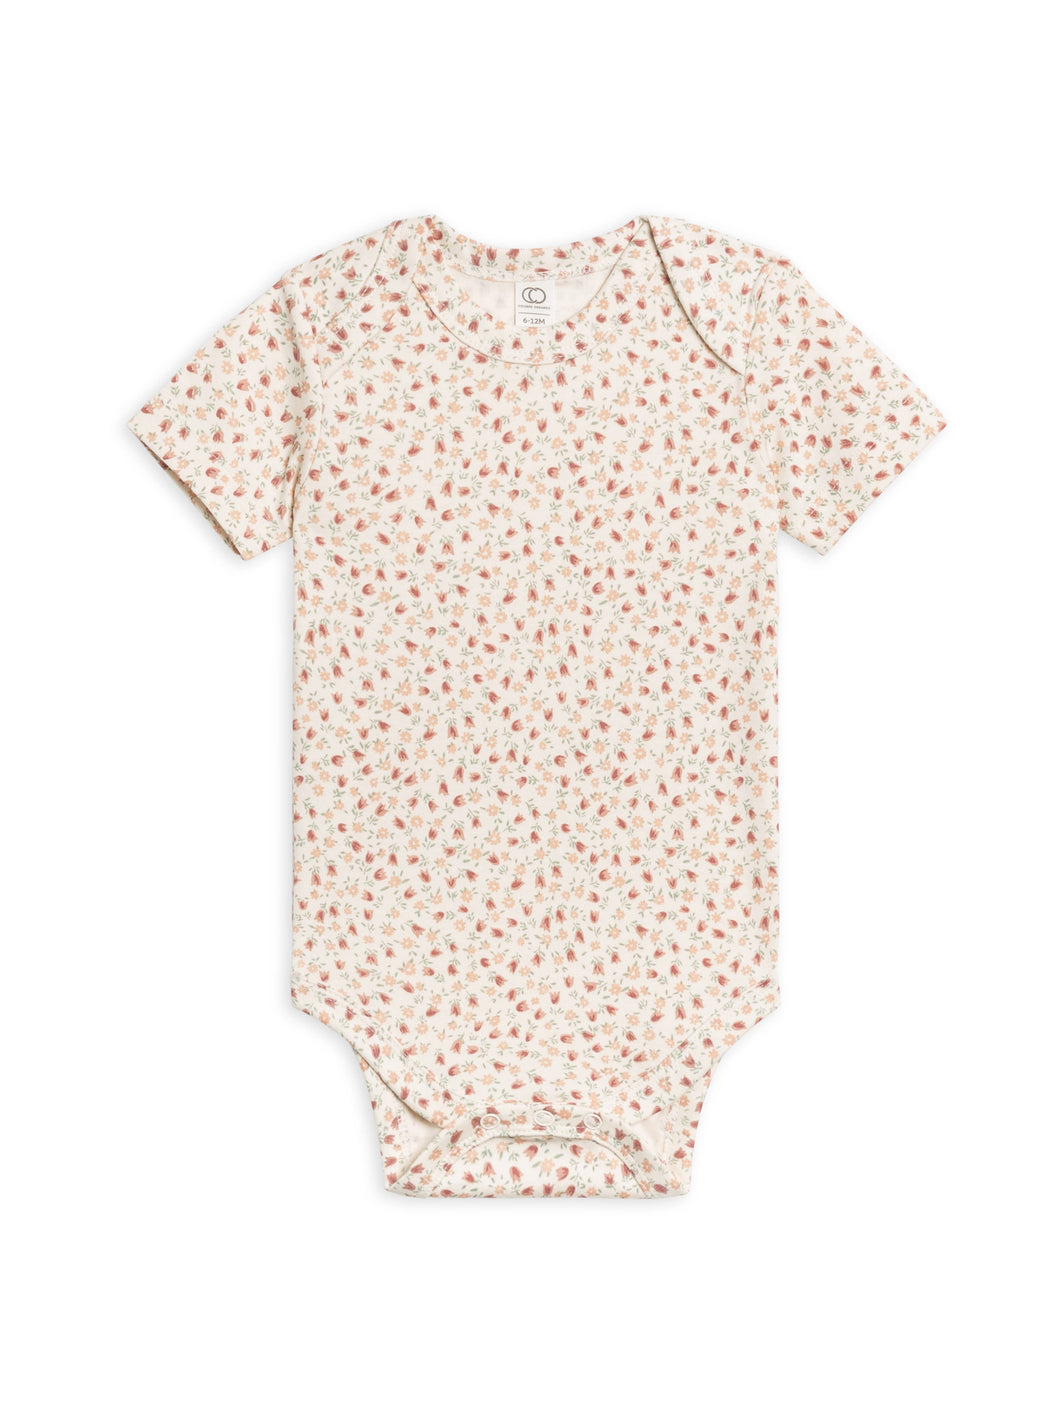 Colored Organics - Organic Baby Afton Bodysuit - Joy Floral / Berry